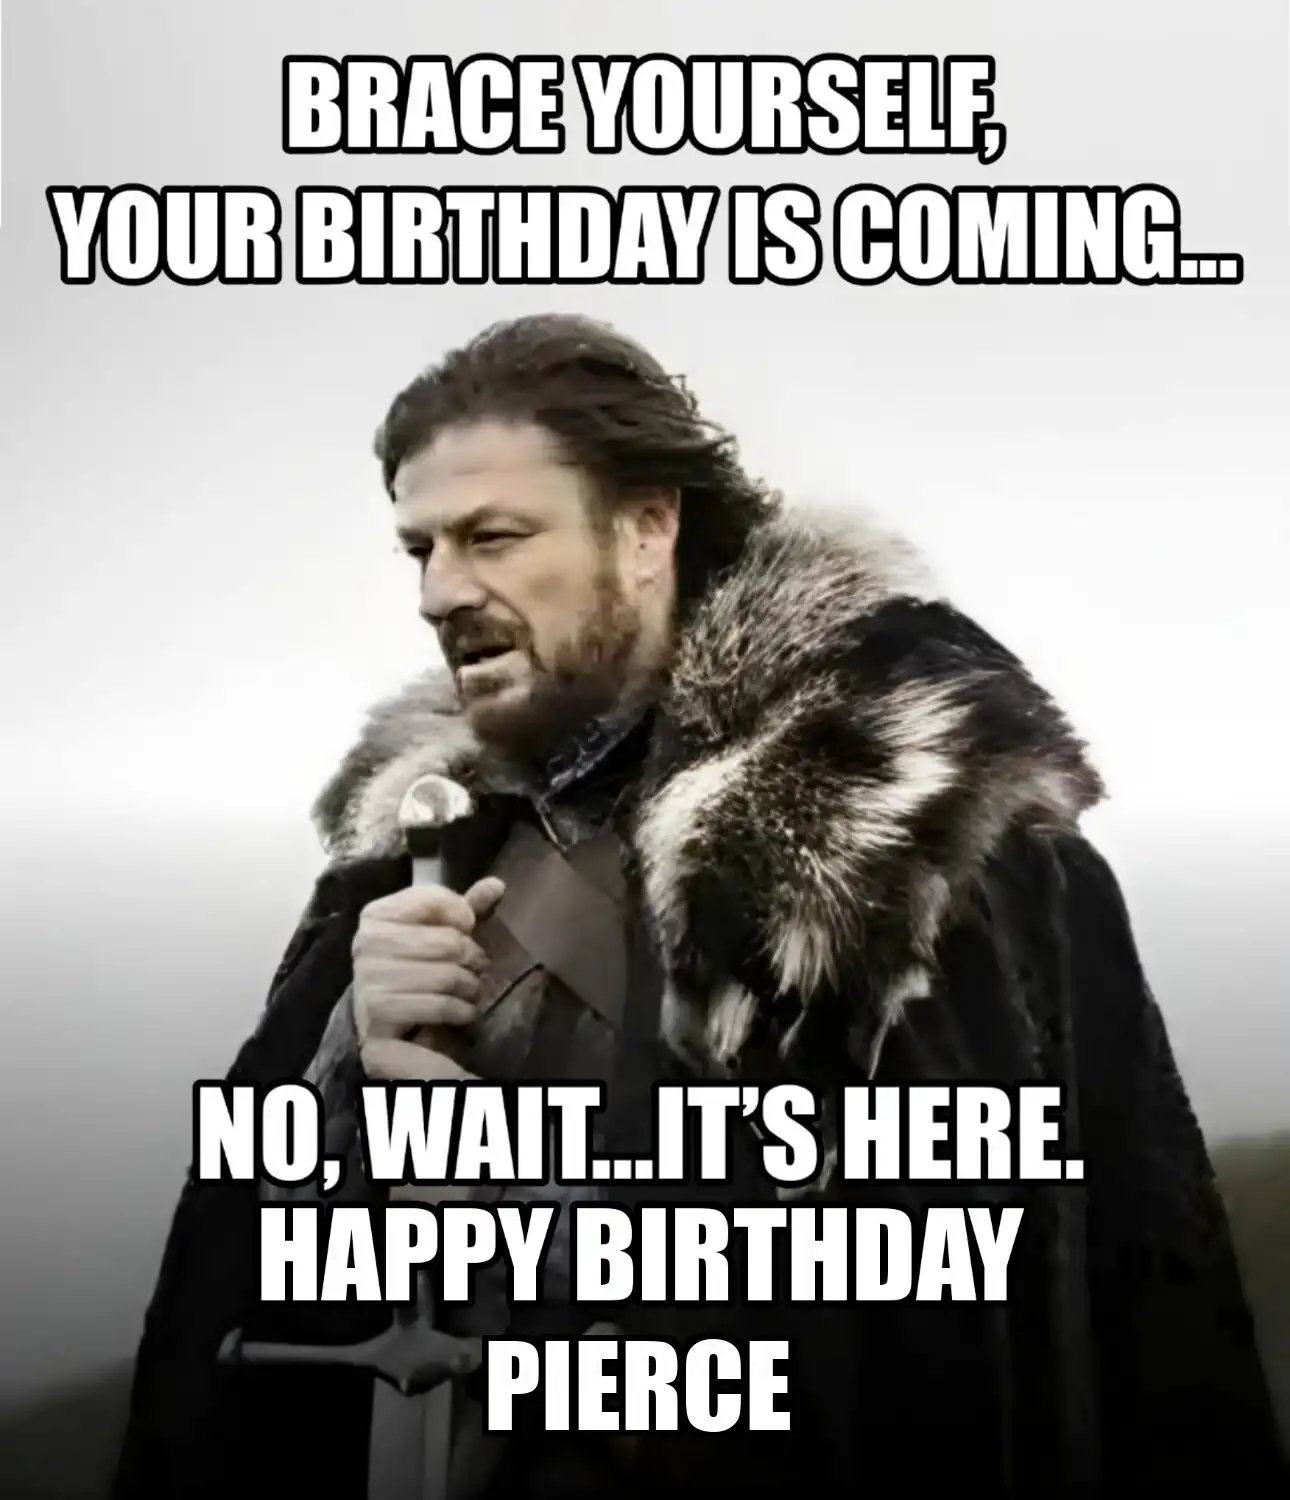 Happy Birthday Pierce Brace Yourself Your Birthday Is Coming Meme